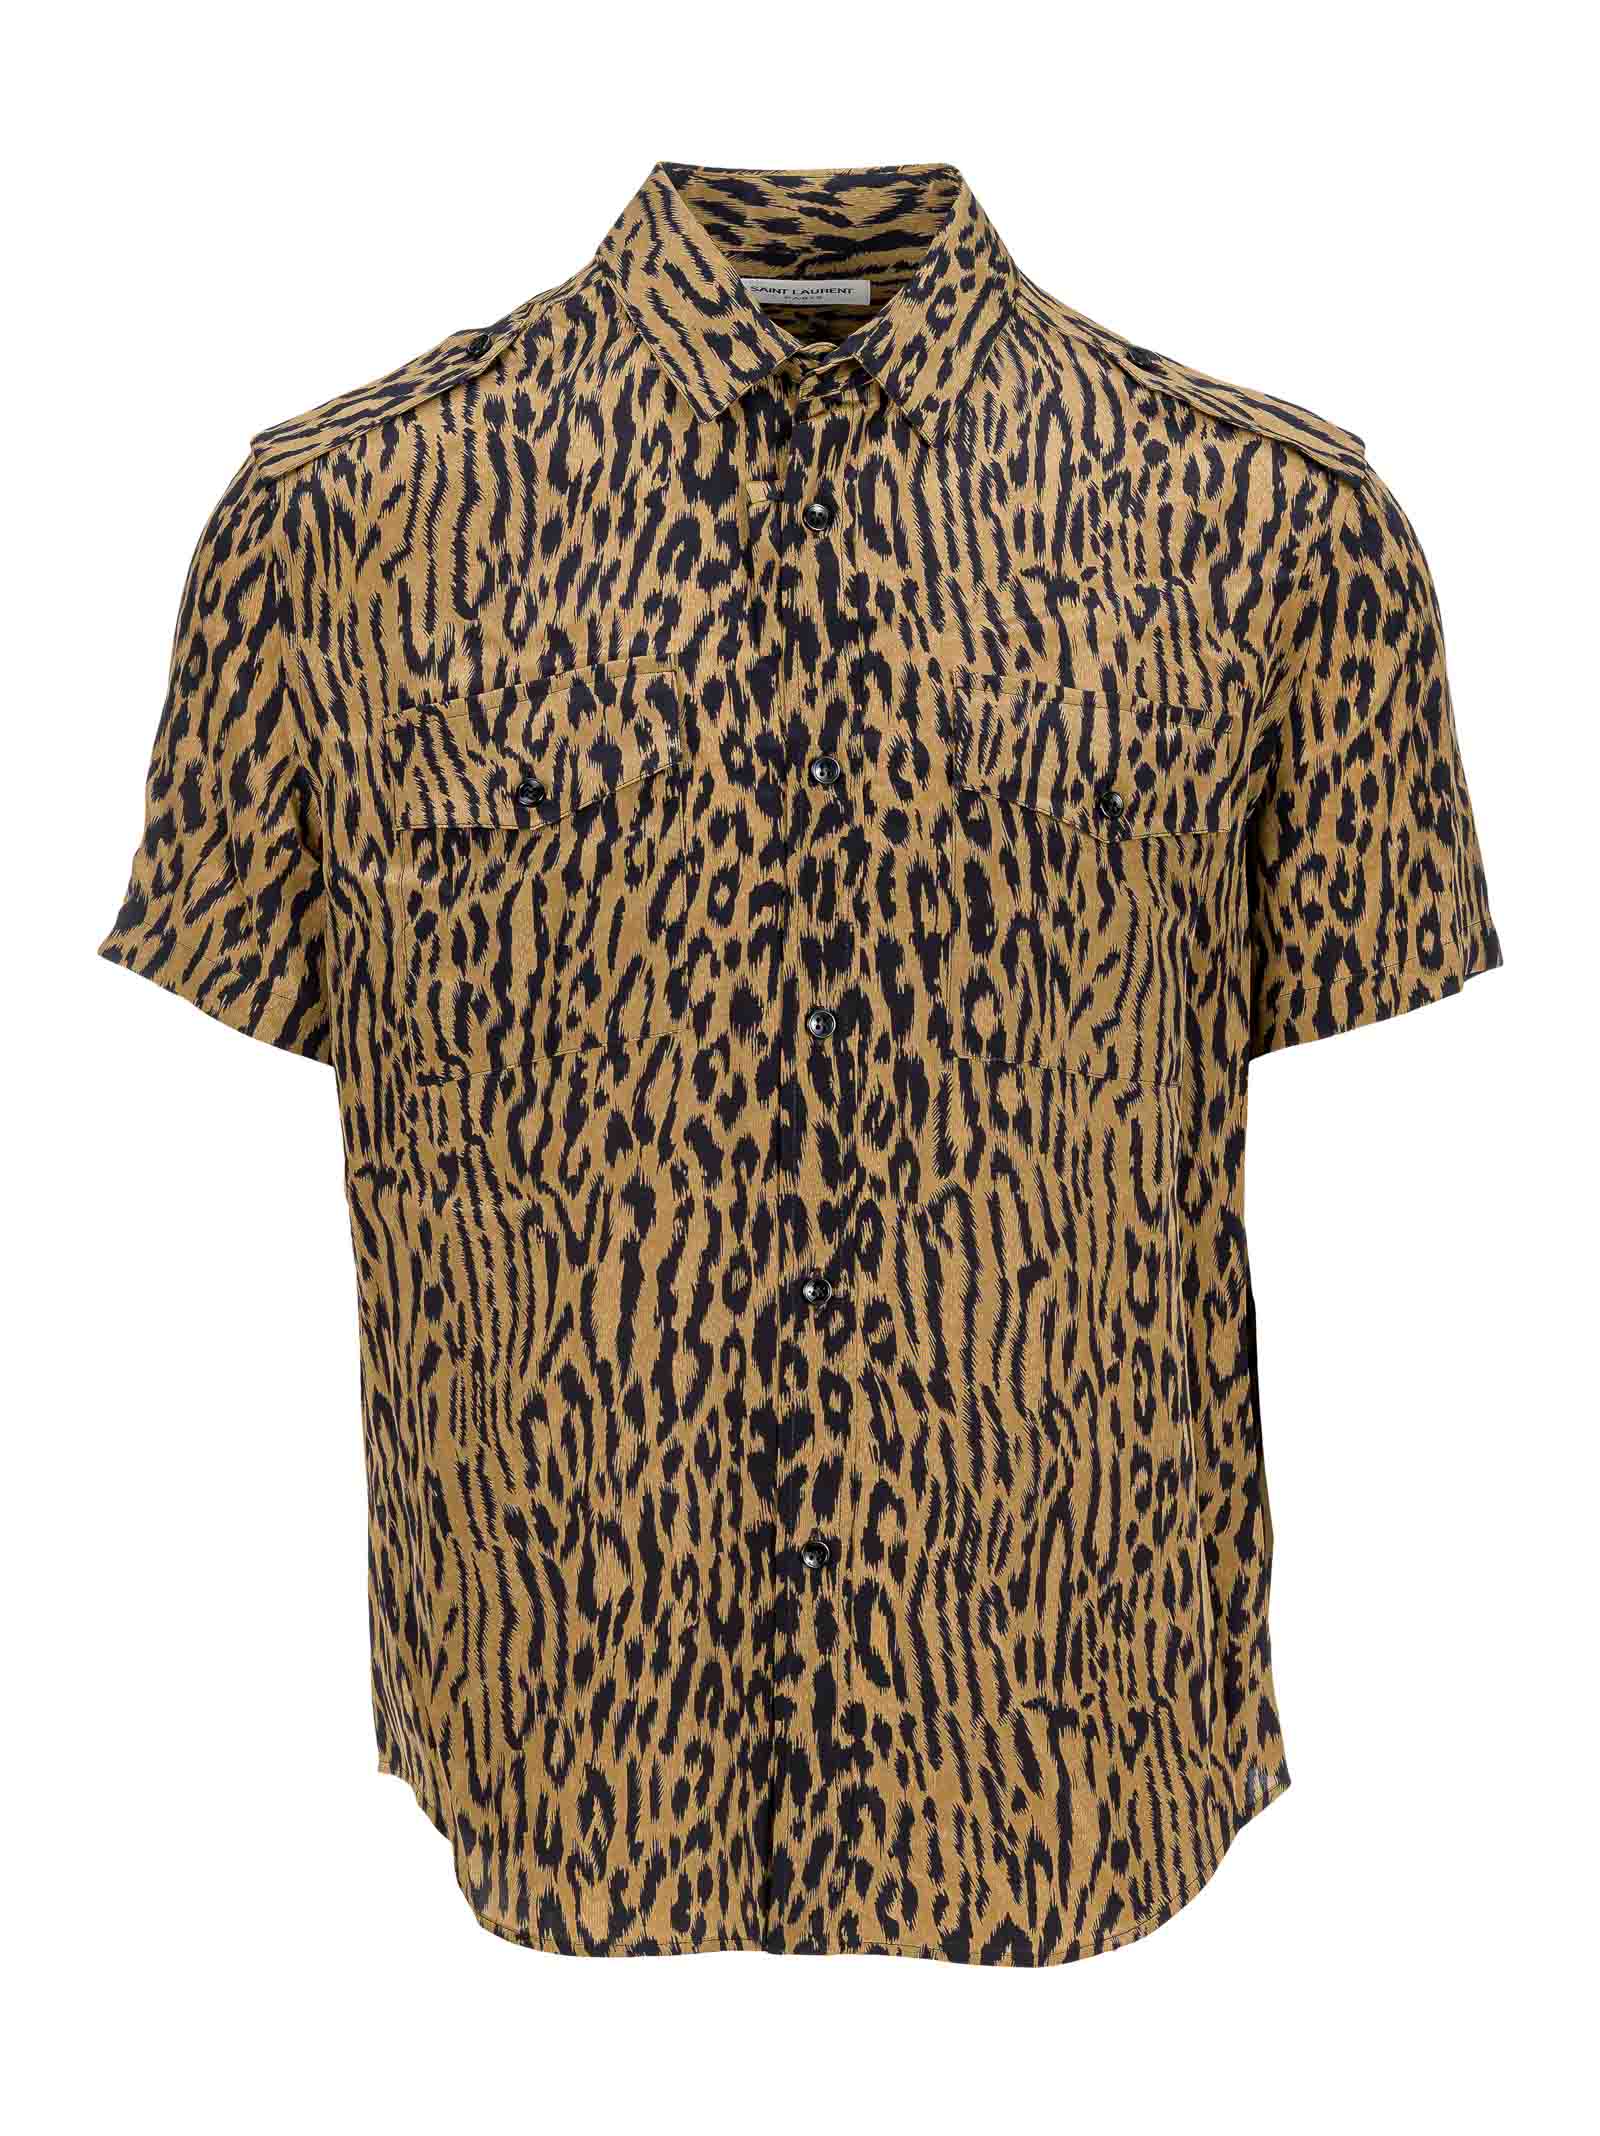 Saint Laurent S/s Shirt In Leopard Print Silk